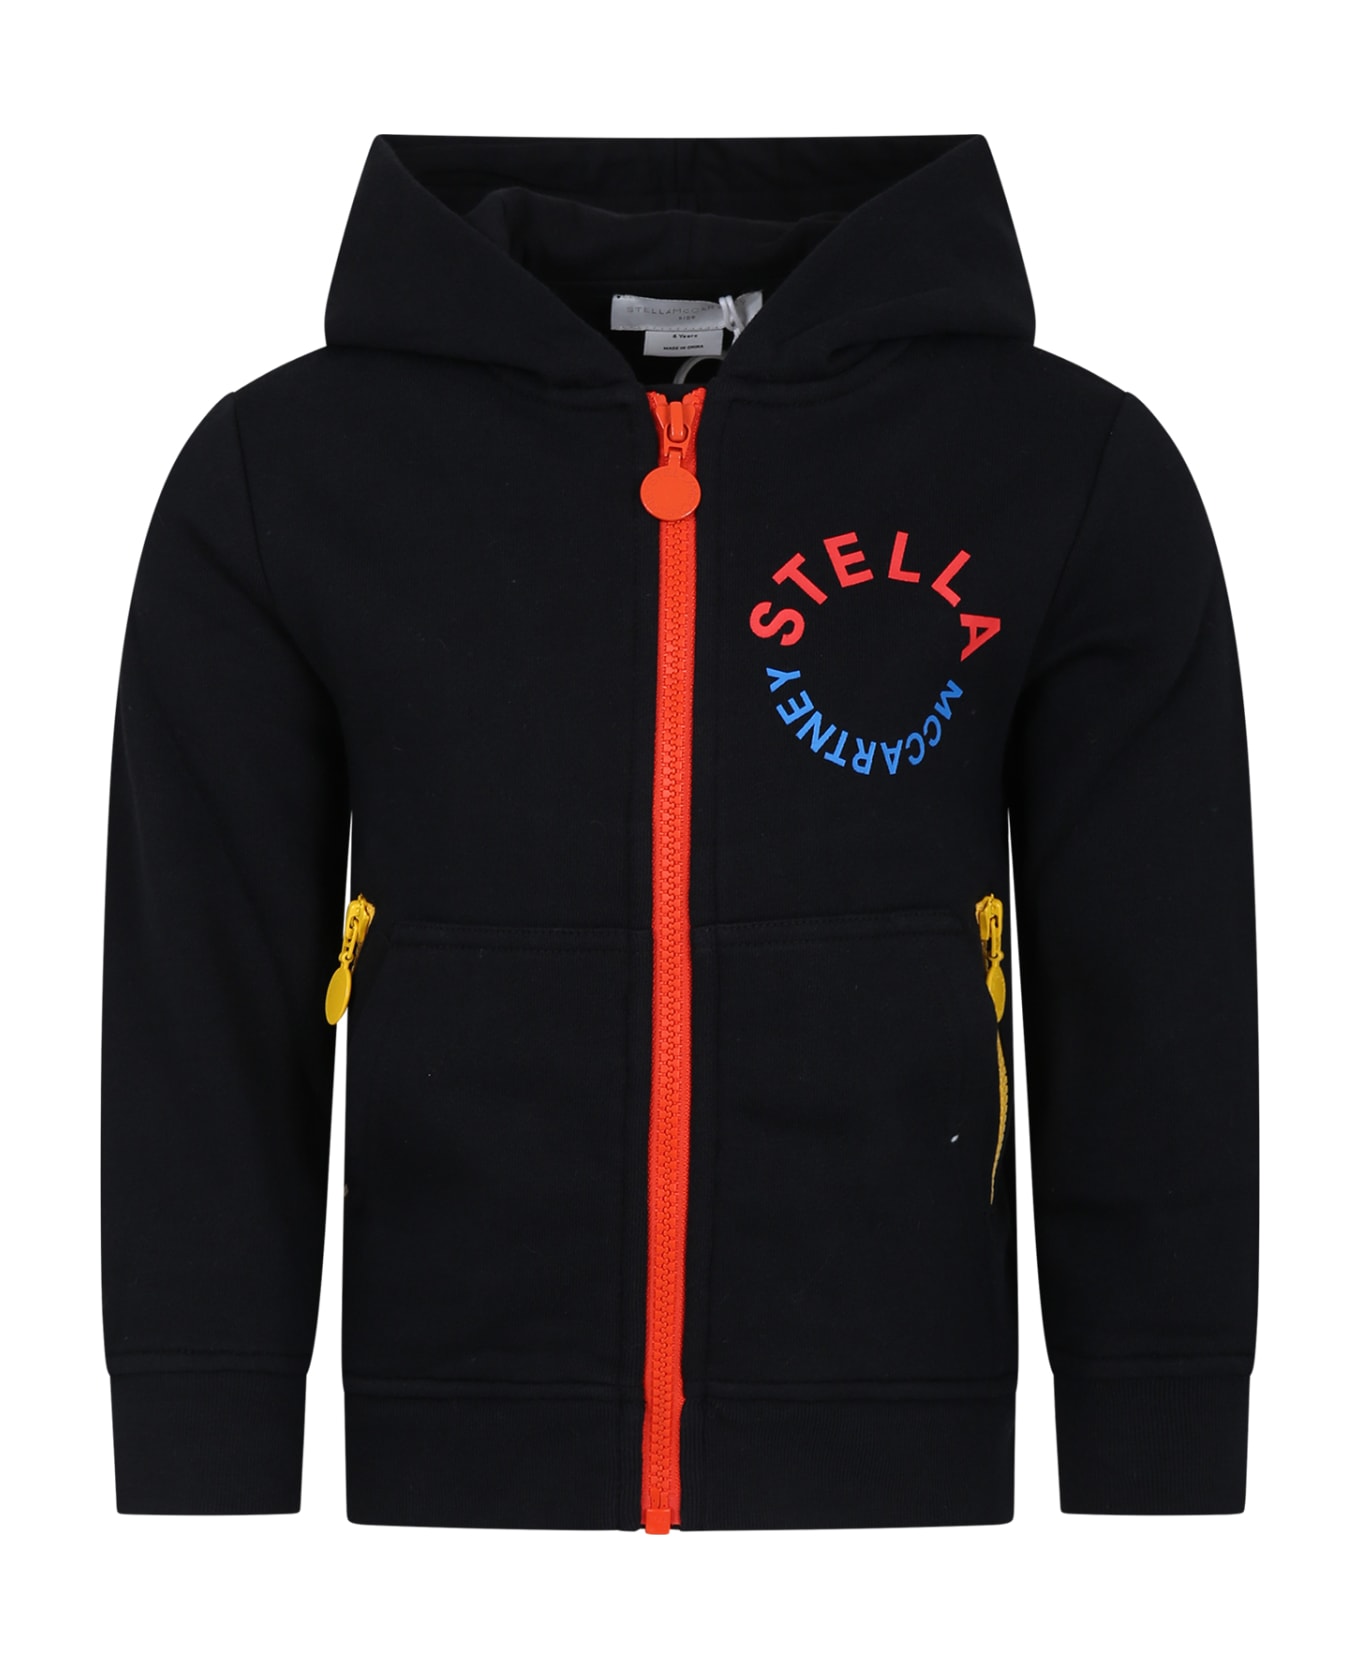 Stella McCartney Kids Black Sweatshirt For Kids With Logo - Black